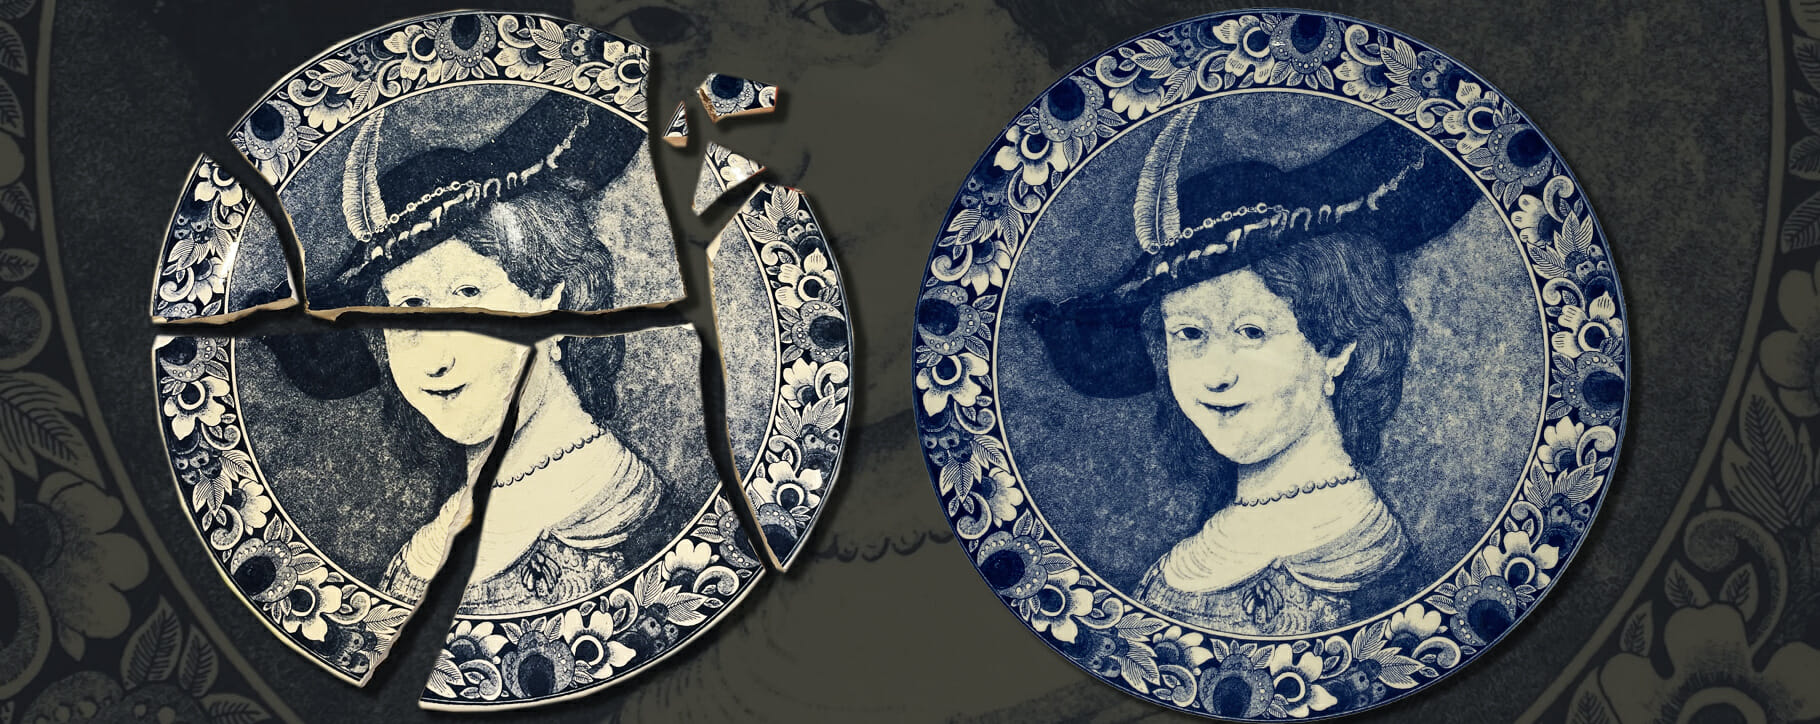 Blue face ceramic plate restoration